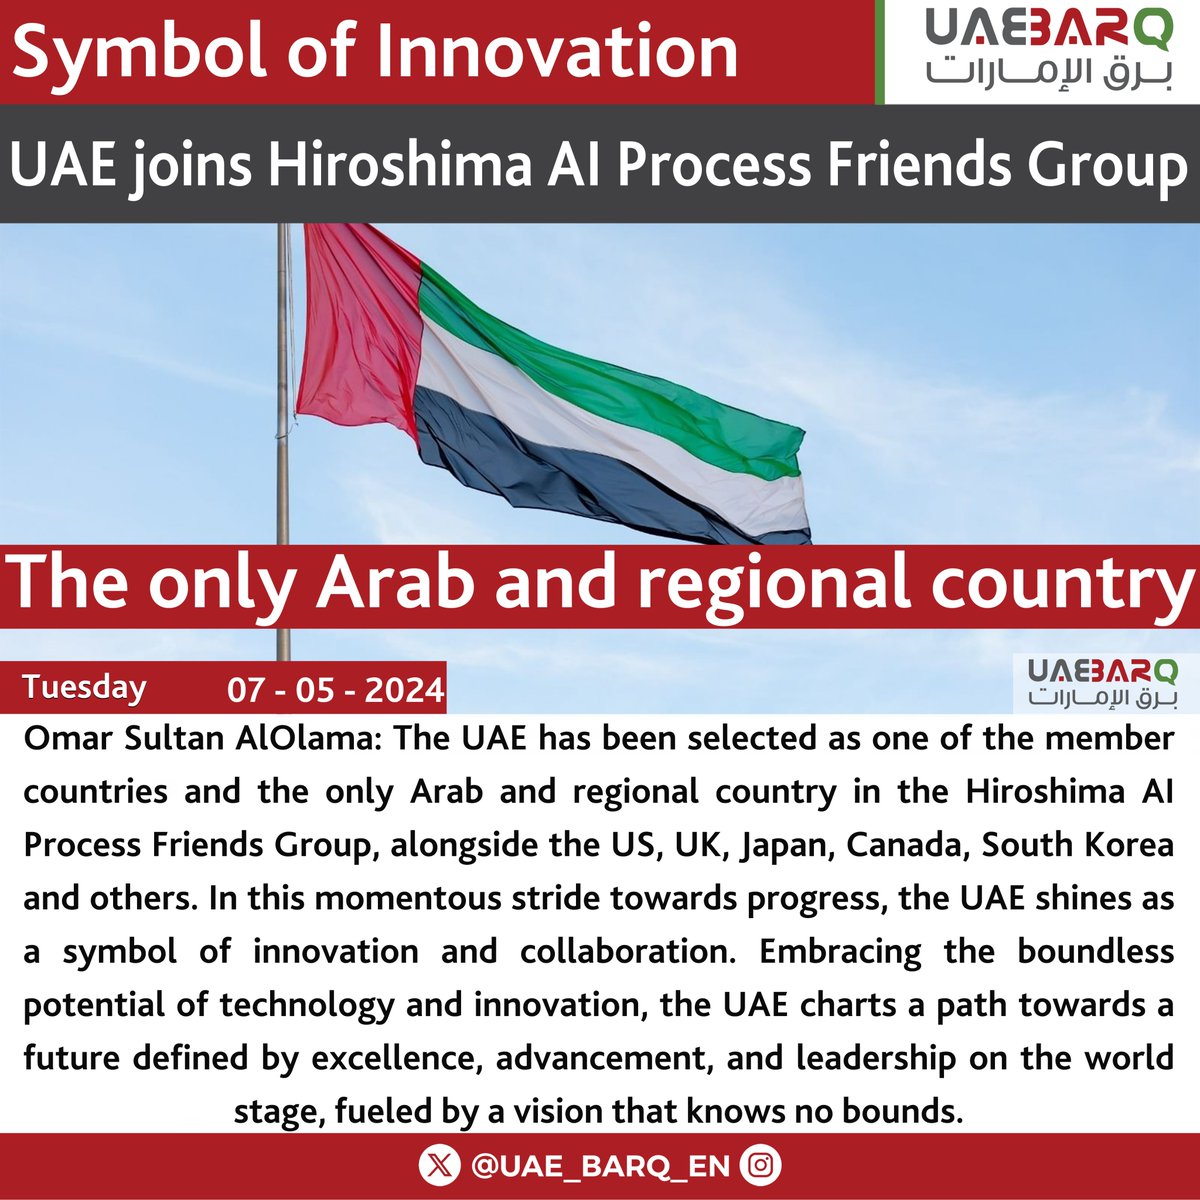 #UAE joins Hiroshima AI Process Friends Group. #UAE_BARQ_EN